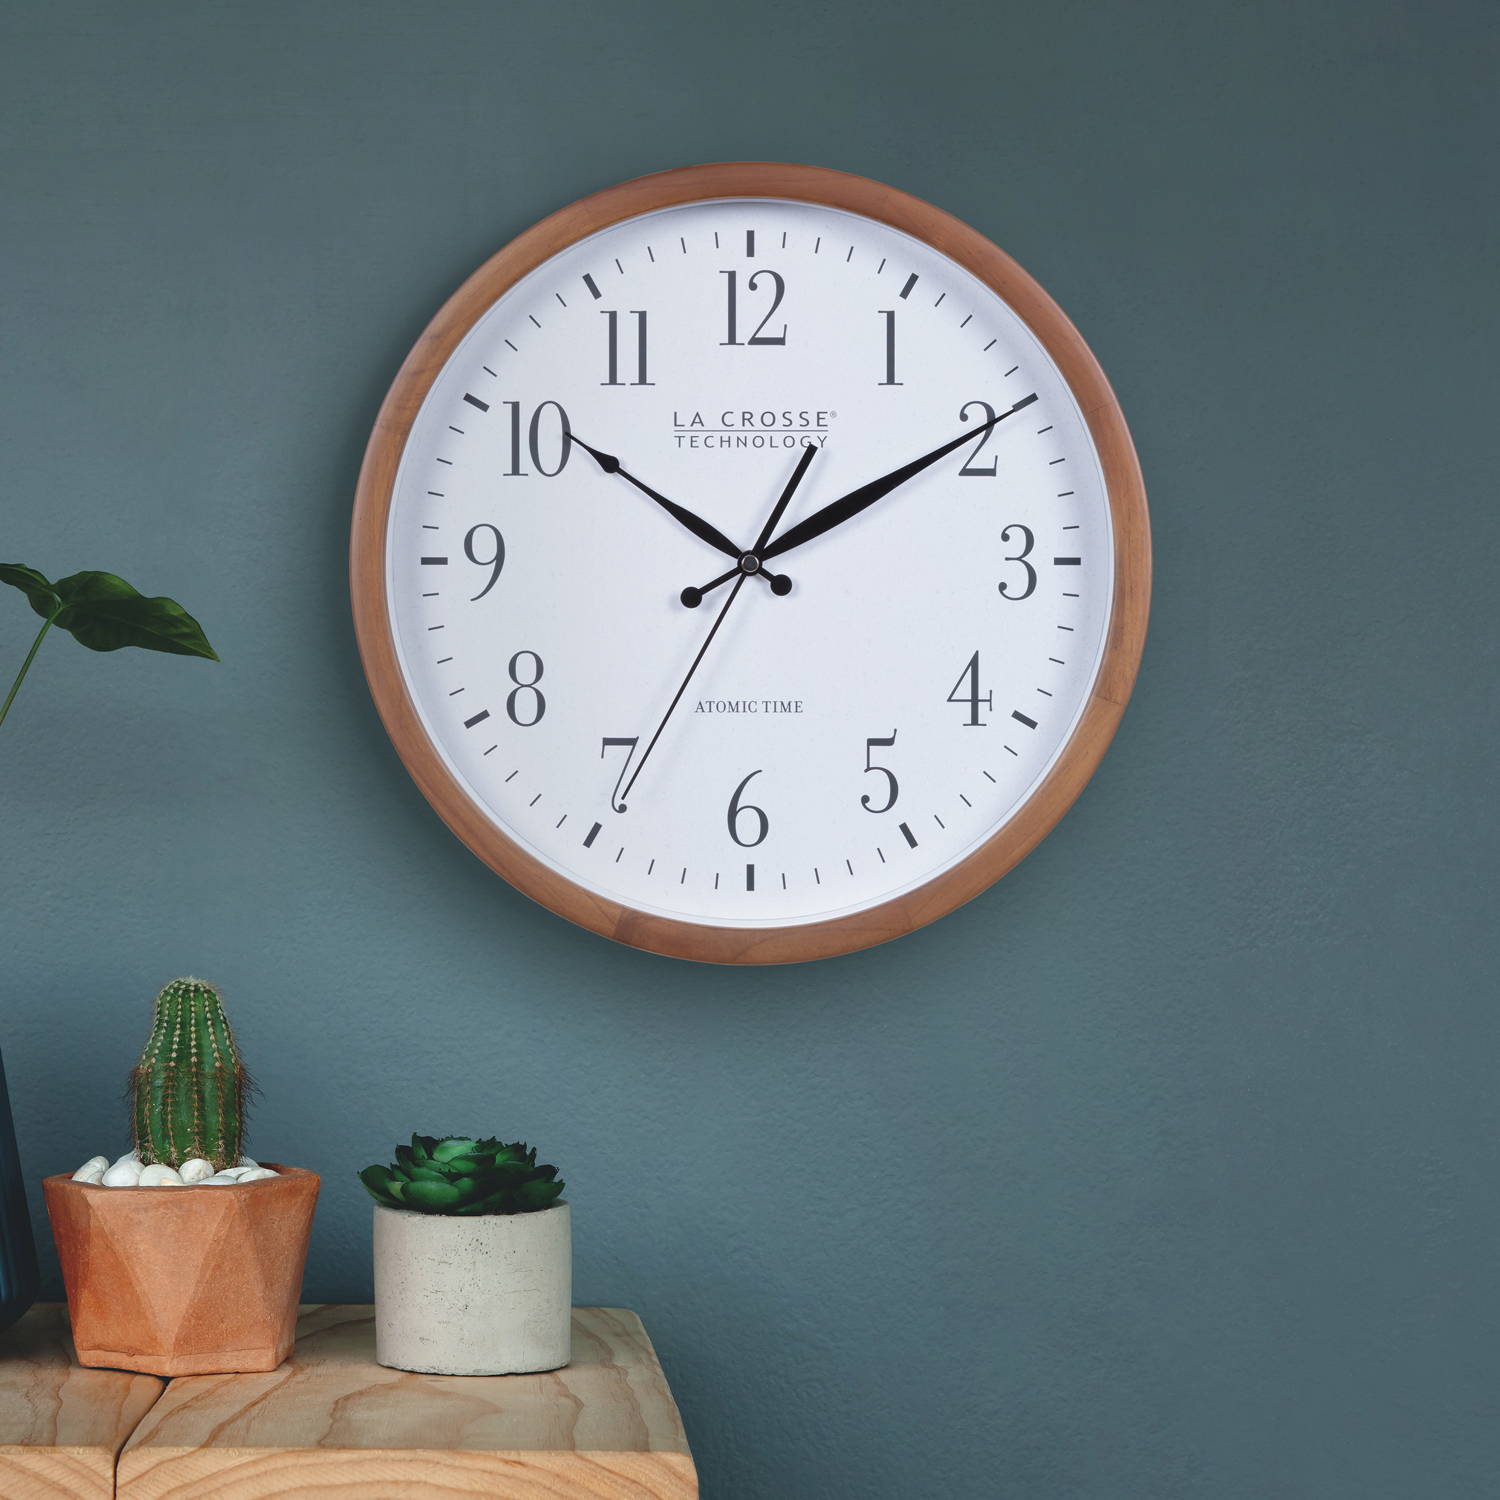 Interior styles and analog wall clocks –